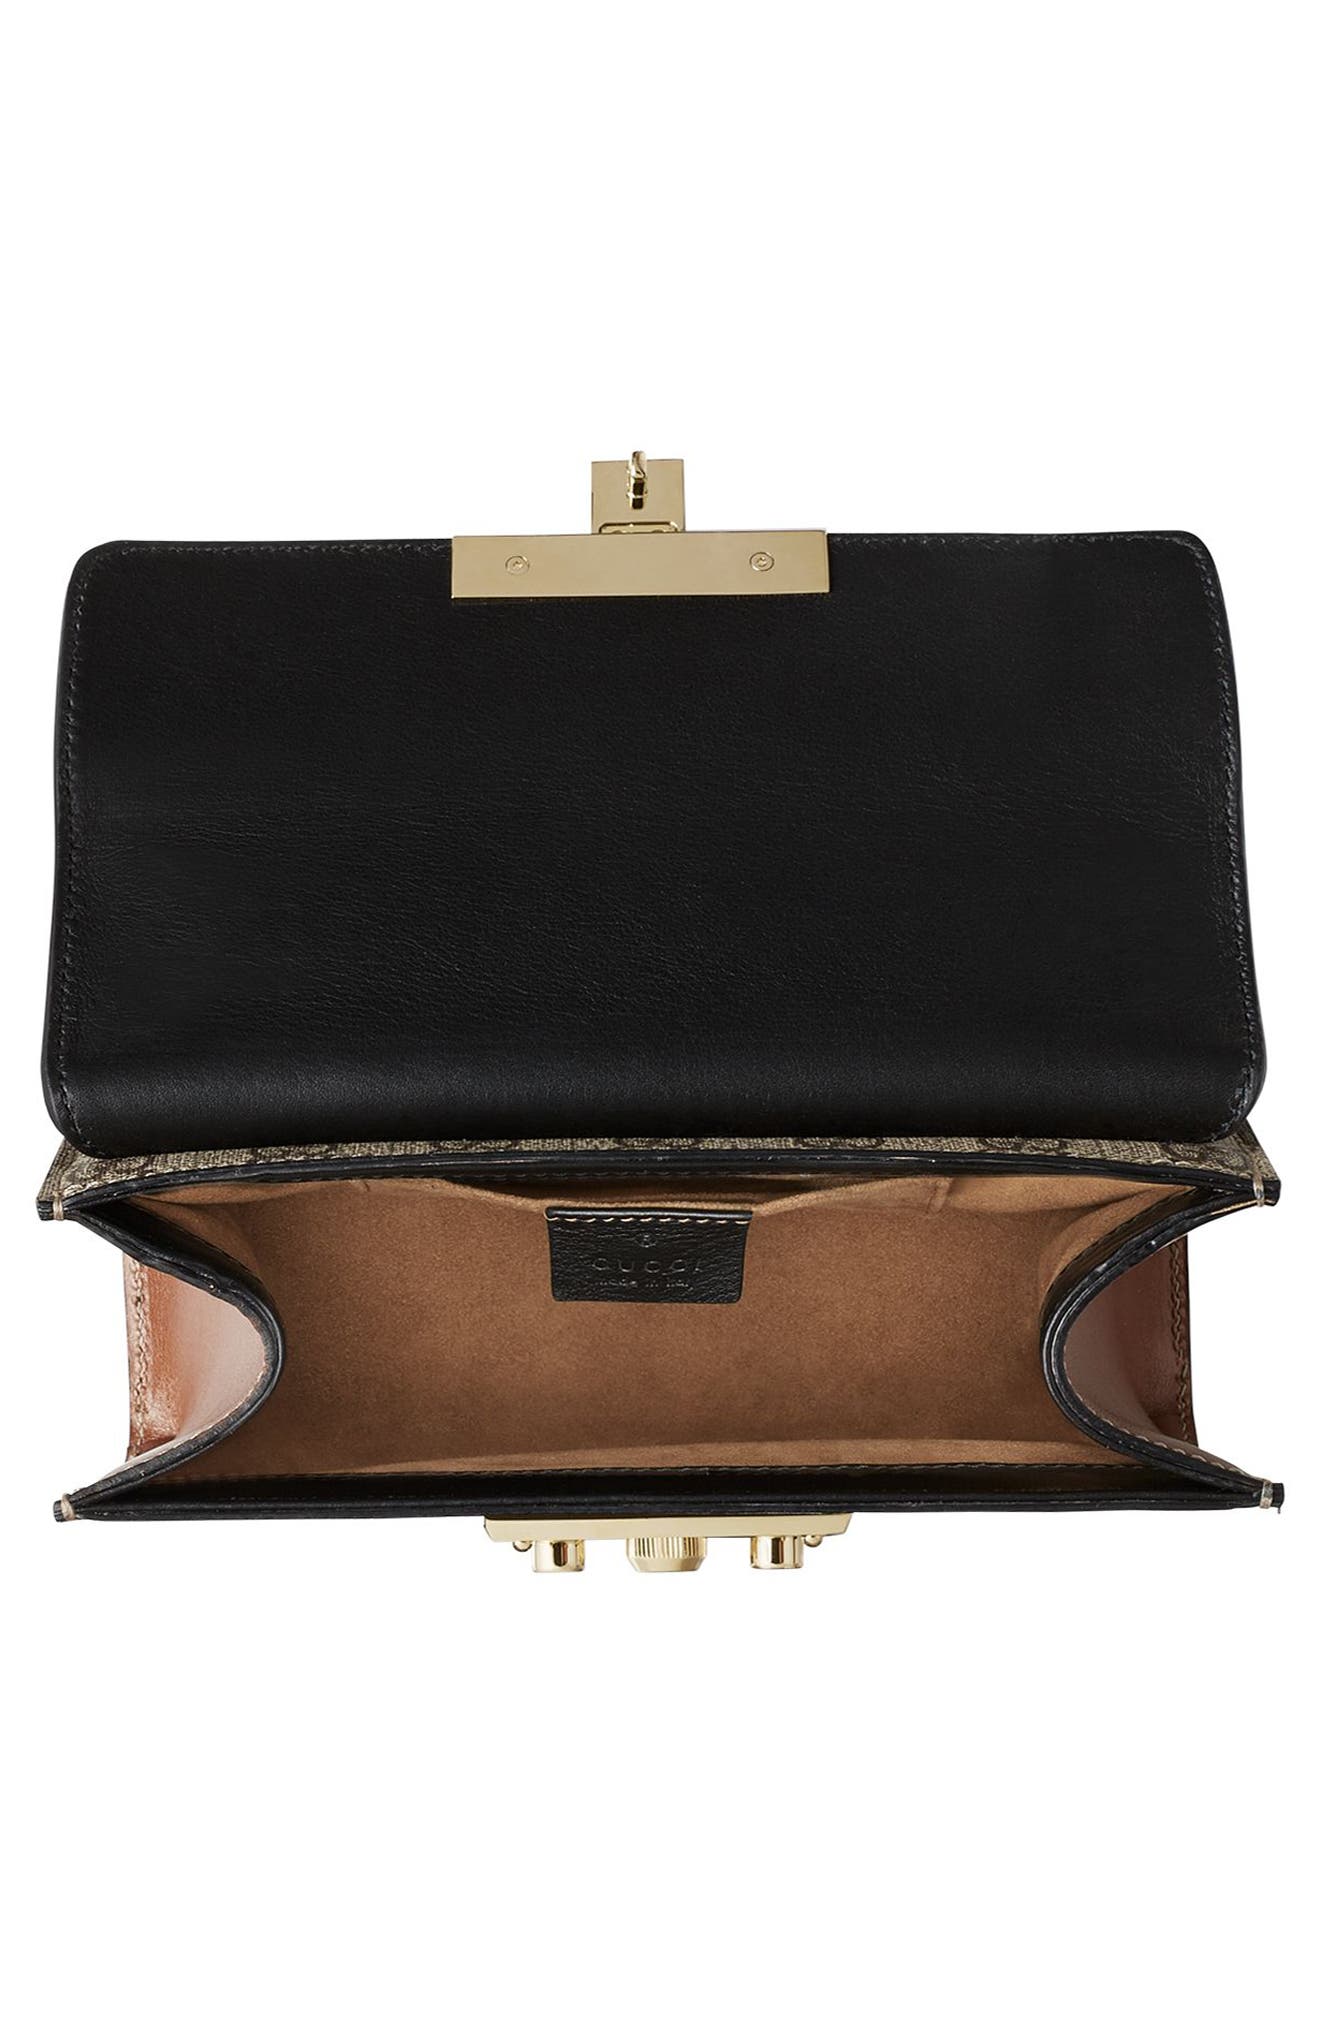 GUCCI Small Padlock Gg Supreme Canvas & Leather Shoulder Bag - Beige, Moon/Toscano | ModeSens